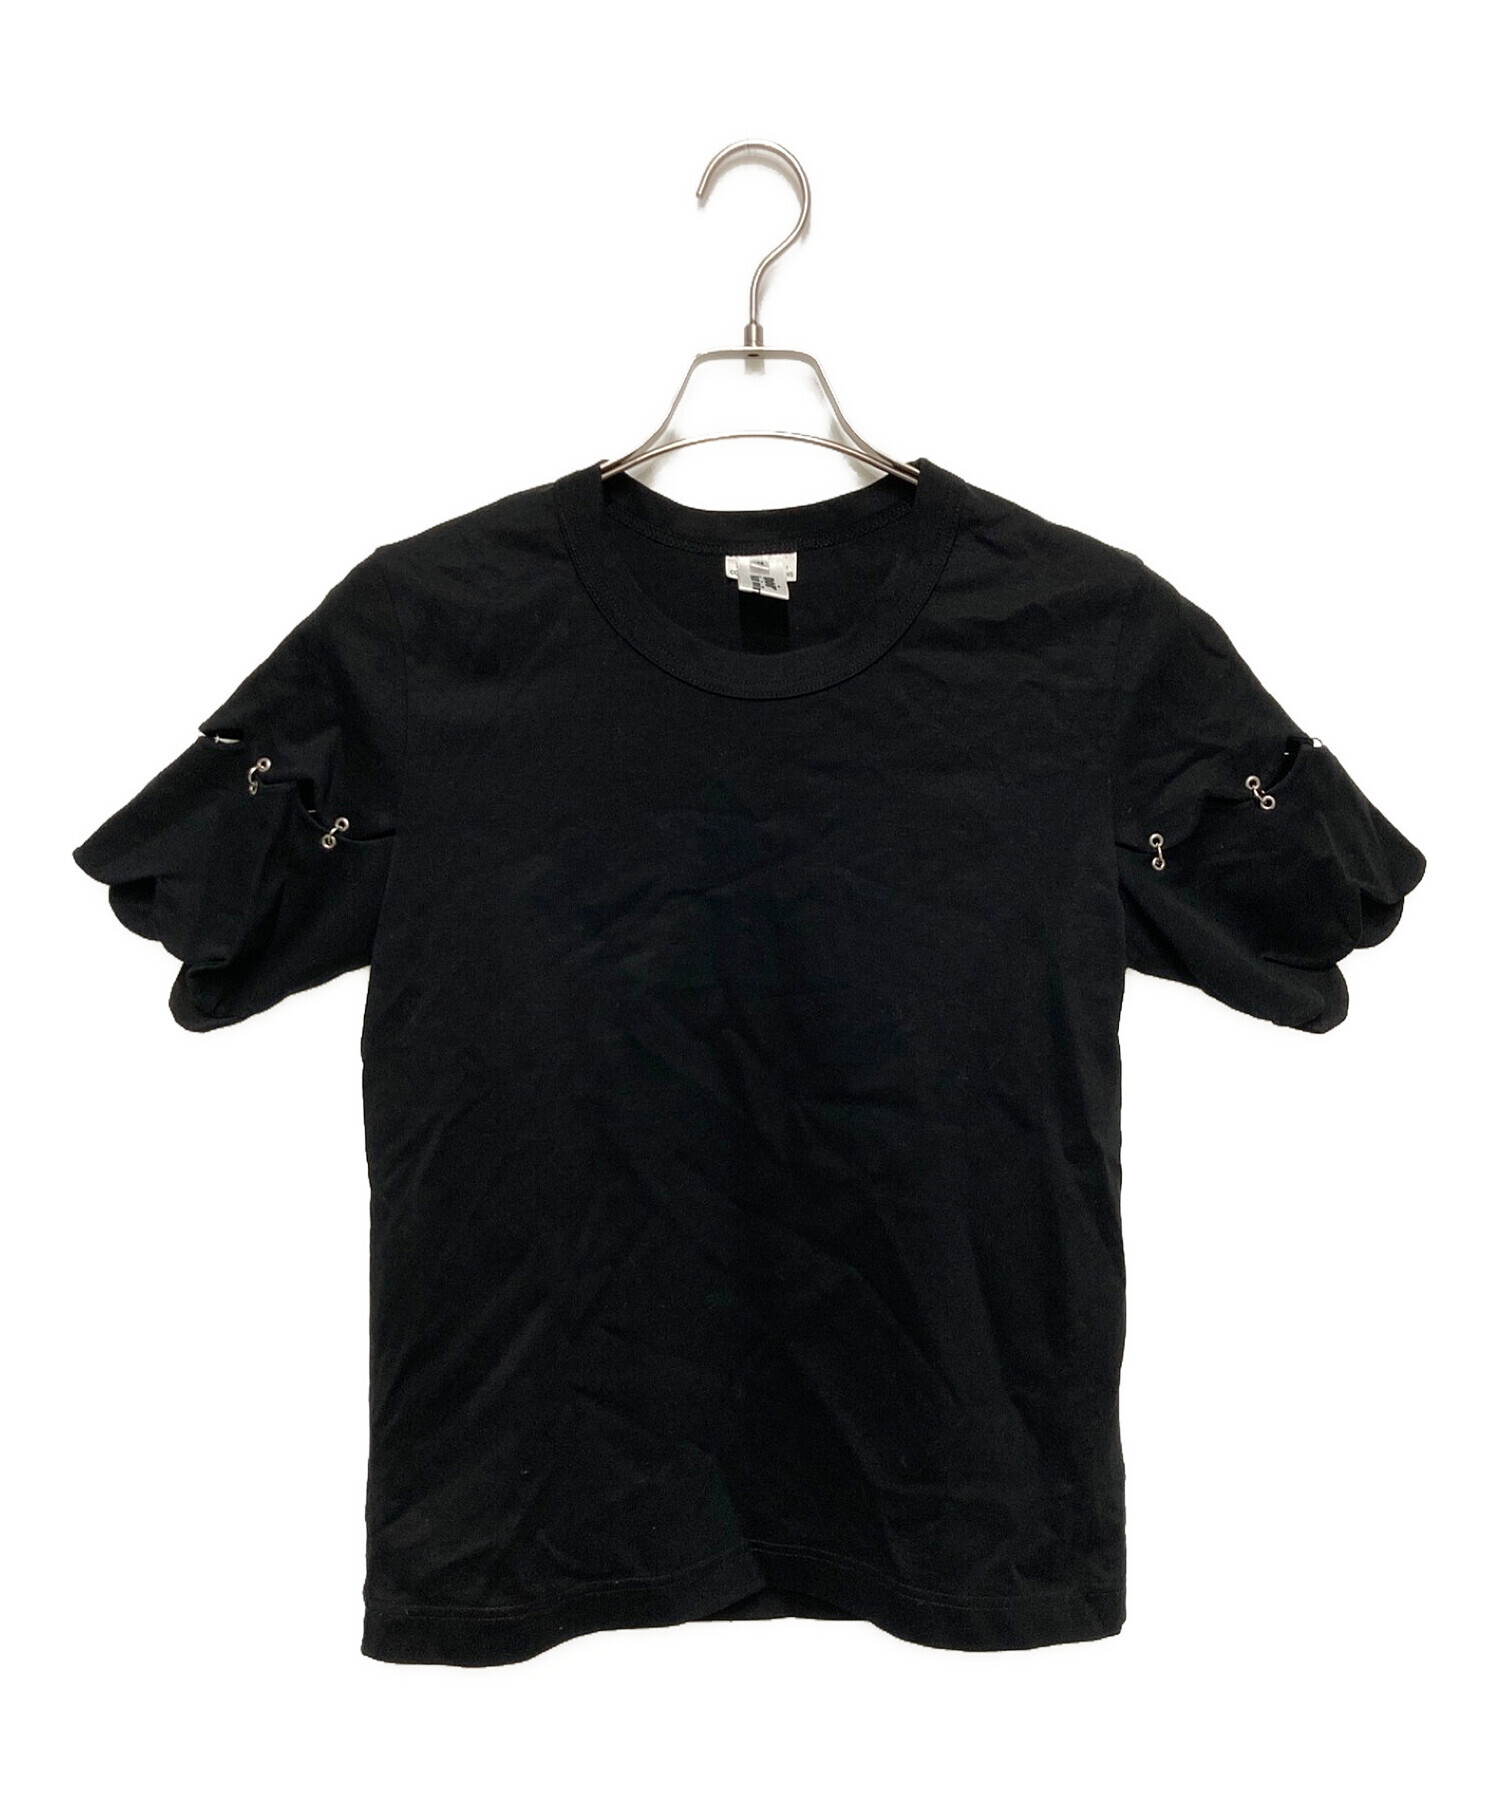 noir kei ninomiya (ノワール ケイ ニノミヤ) COMME des GARCONS (コムデギャルソン) Tシャツ ブラック  サイズ:M